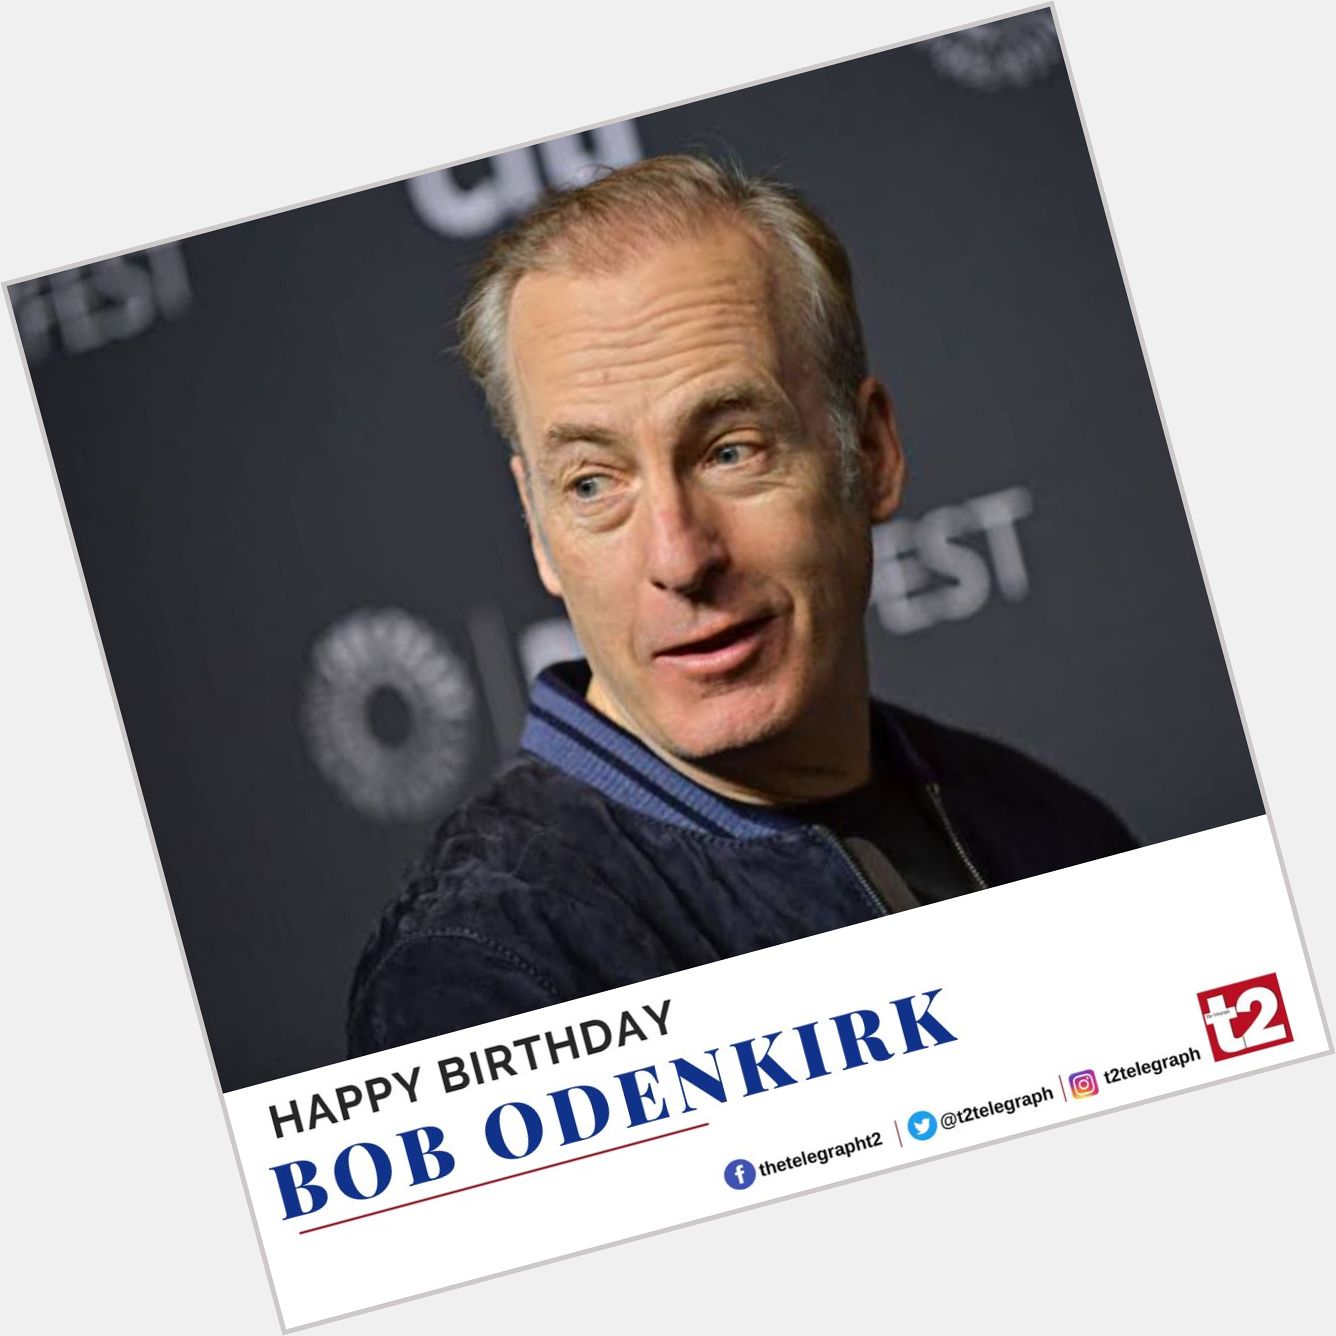 For us, he will always be Saul Goodman. Happy birthday Bob Odenkirk! 